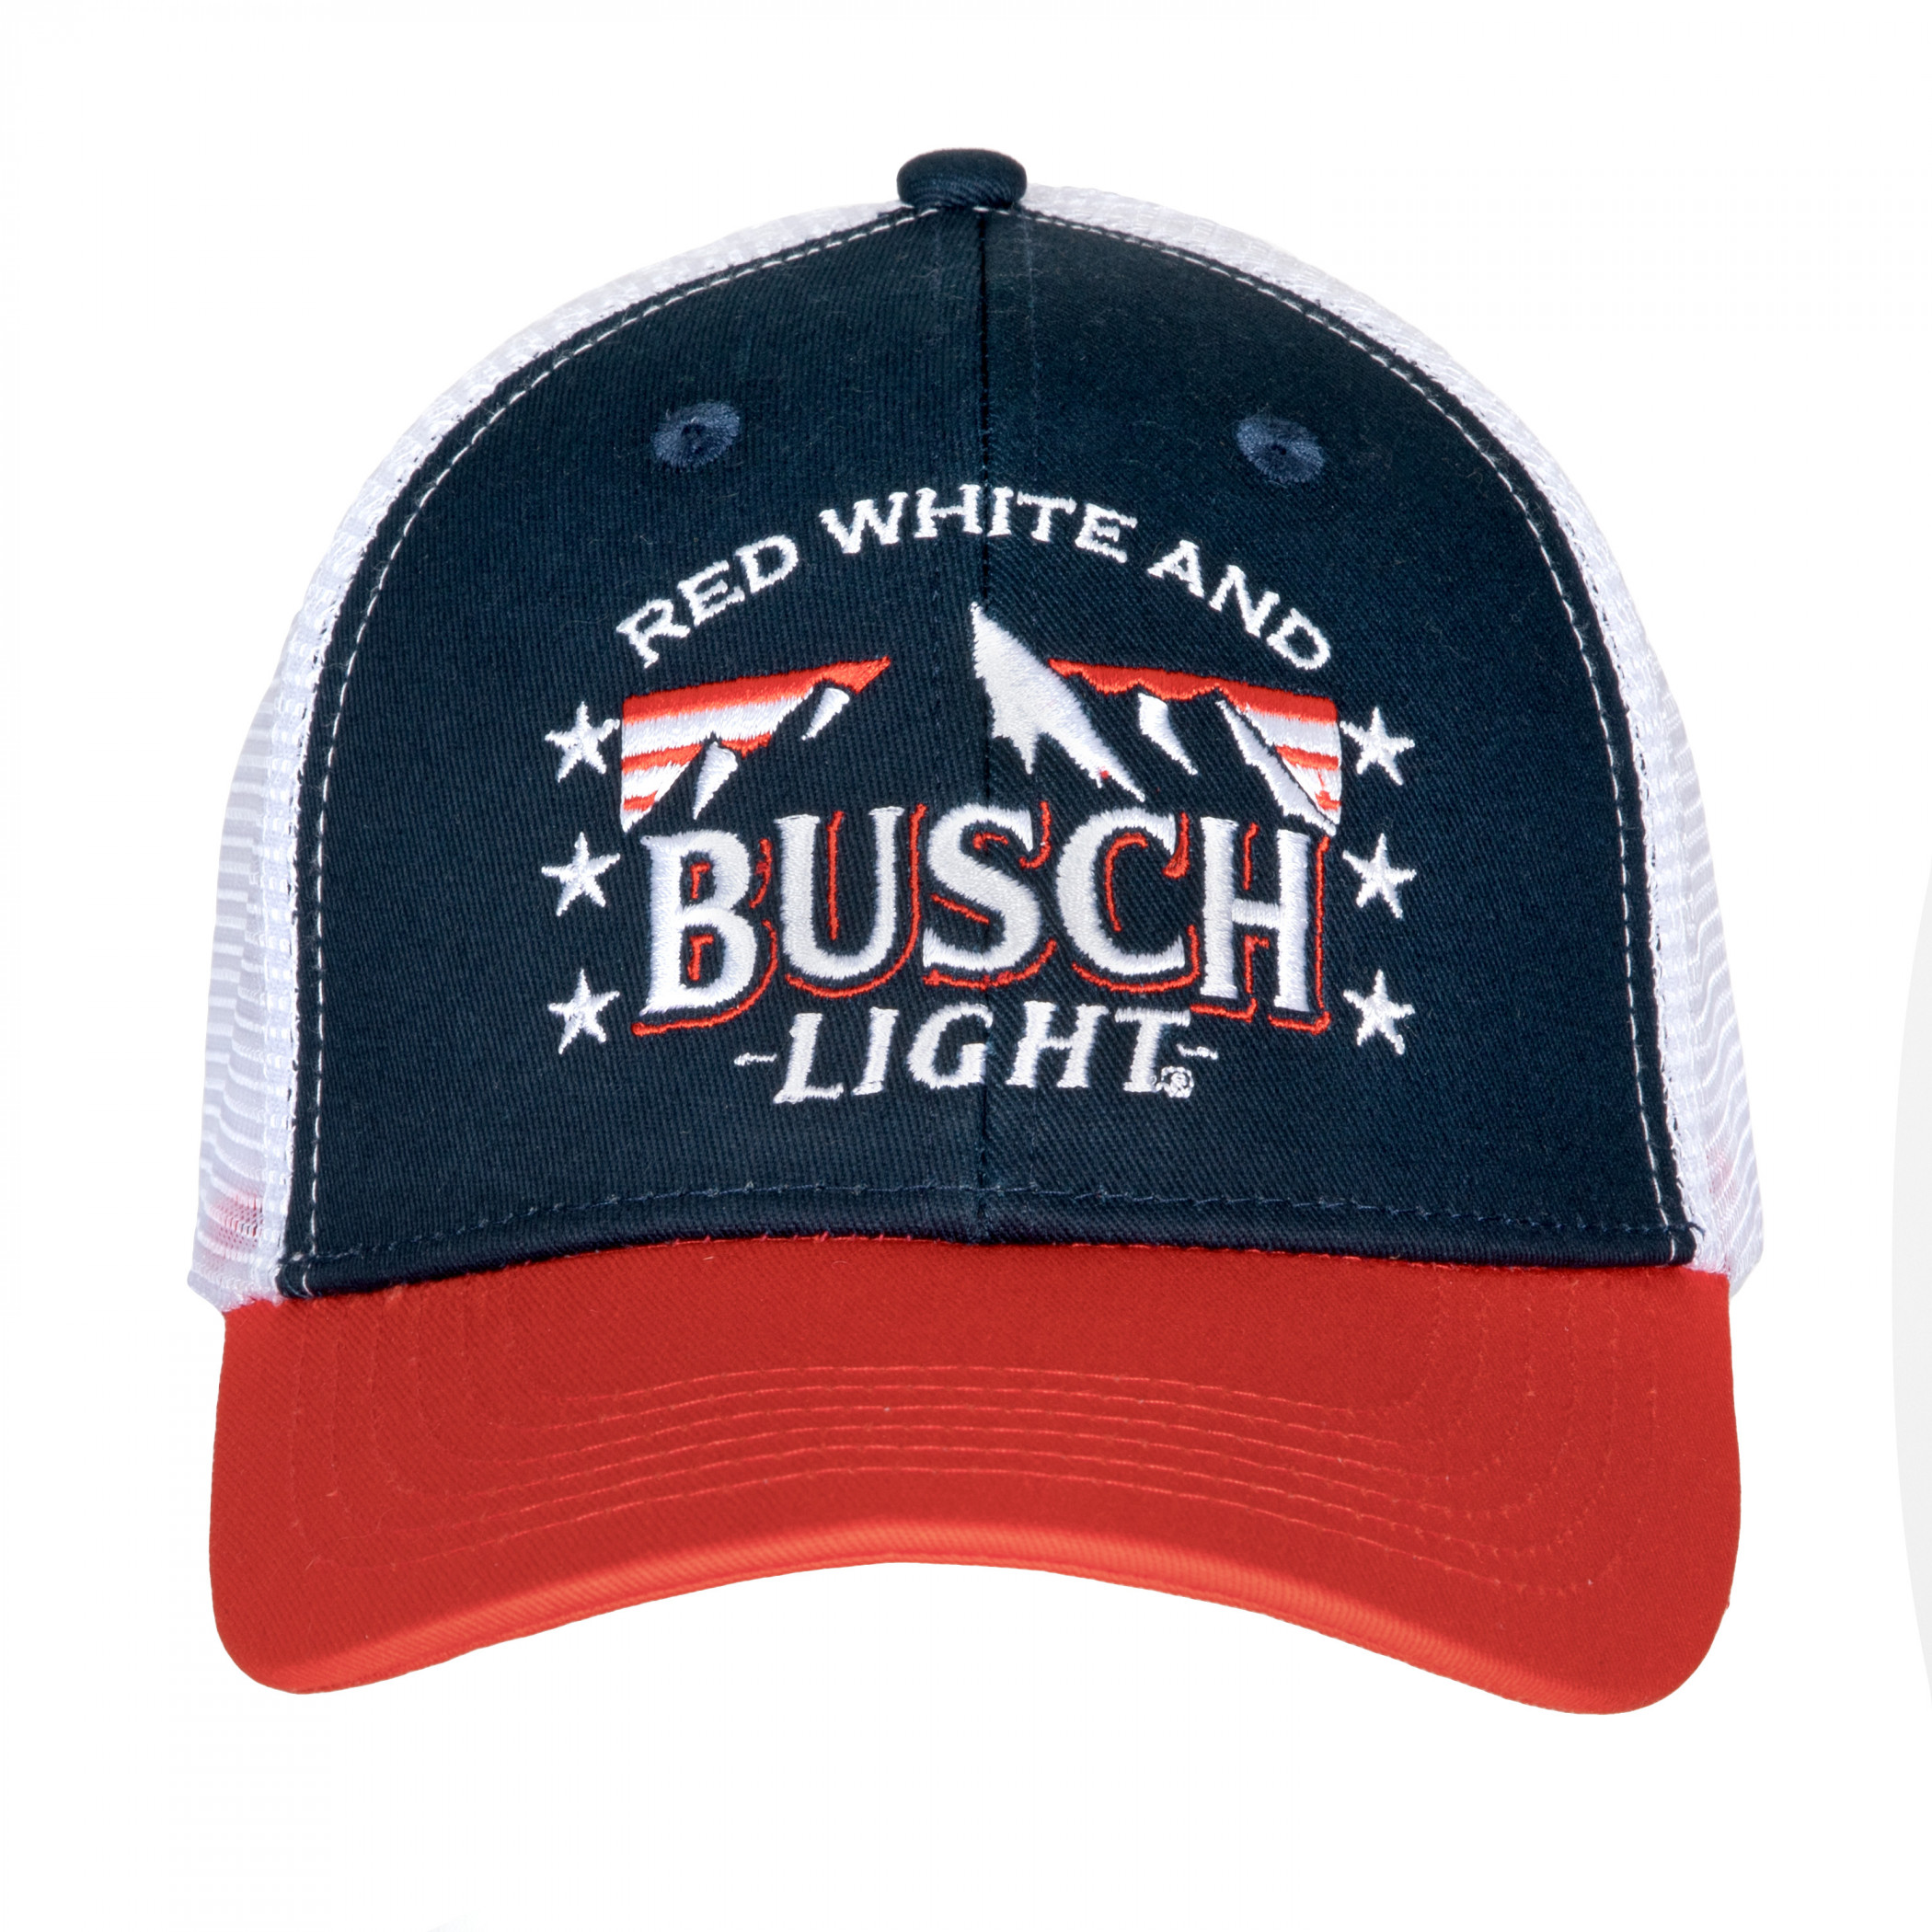 Busch Red White and Busch Light Snapback Cap